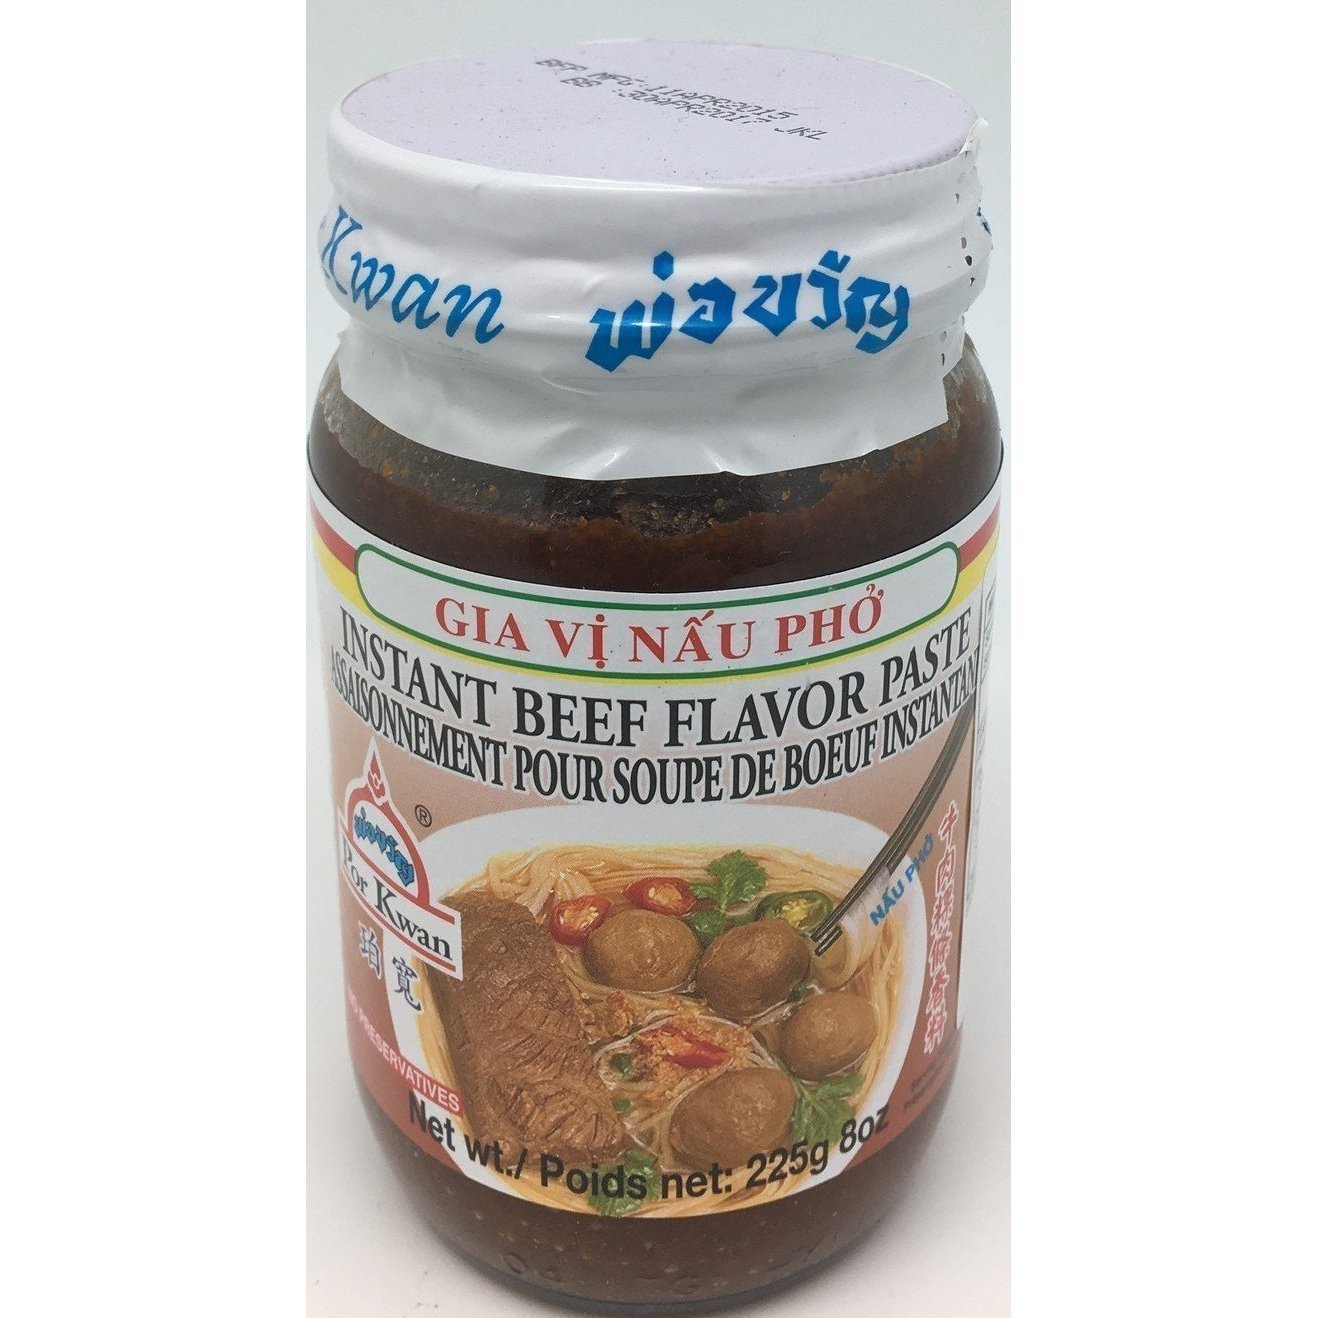 S124W Por Kwan Brand - Instant Beef Flavour Paste 225g - 24 jar / 1CTN - New Eastland Pty Ltd - Asian food wholesalers